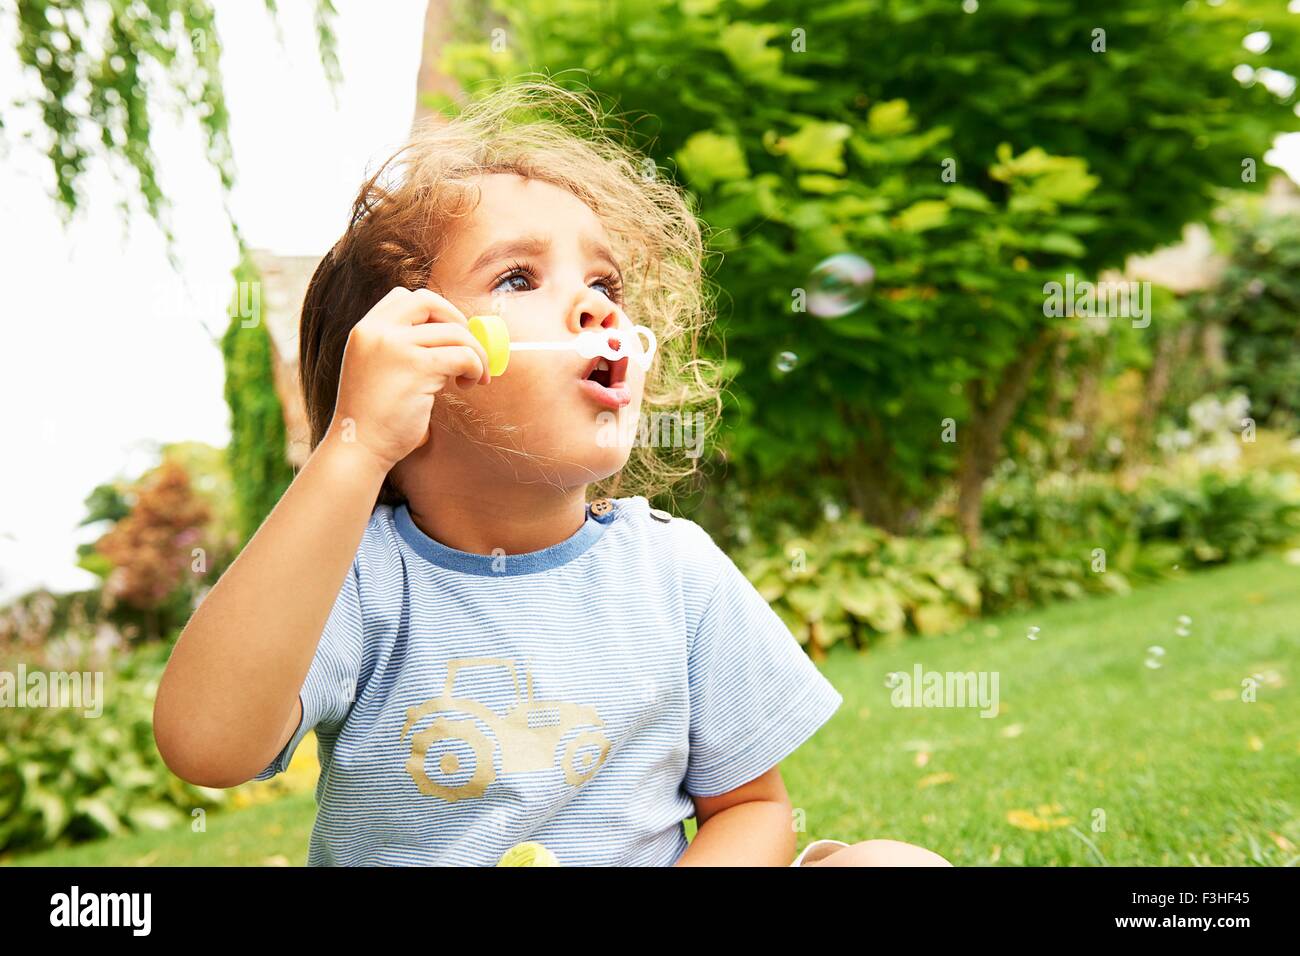 Portrait of cute girl blowing bubbles in garden Stock Photo